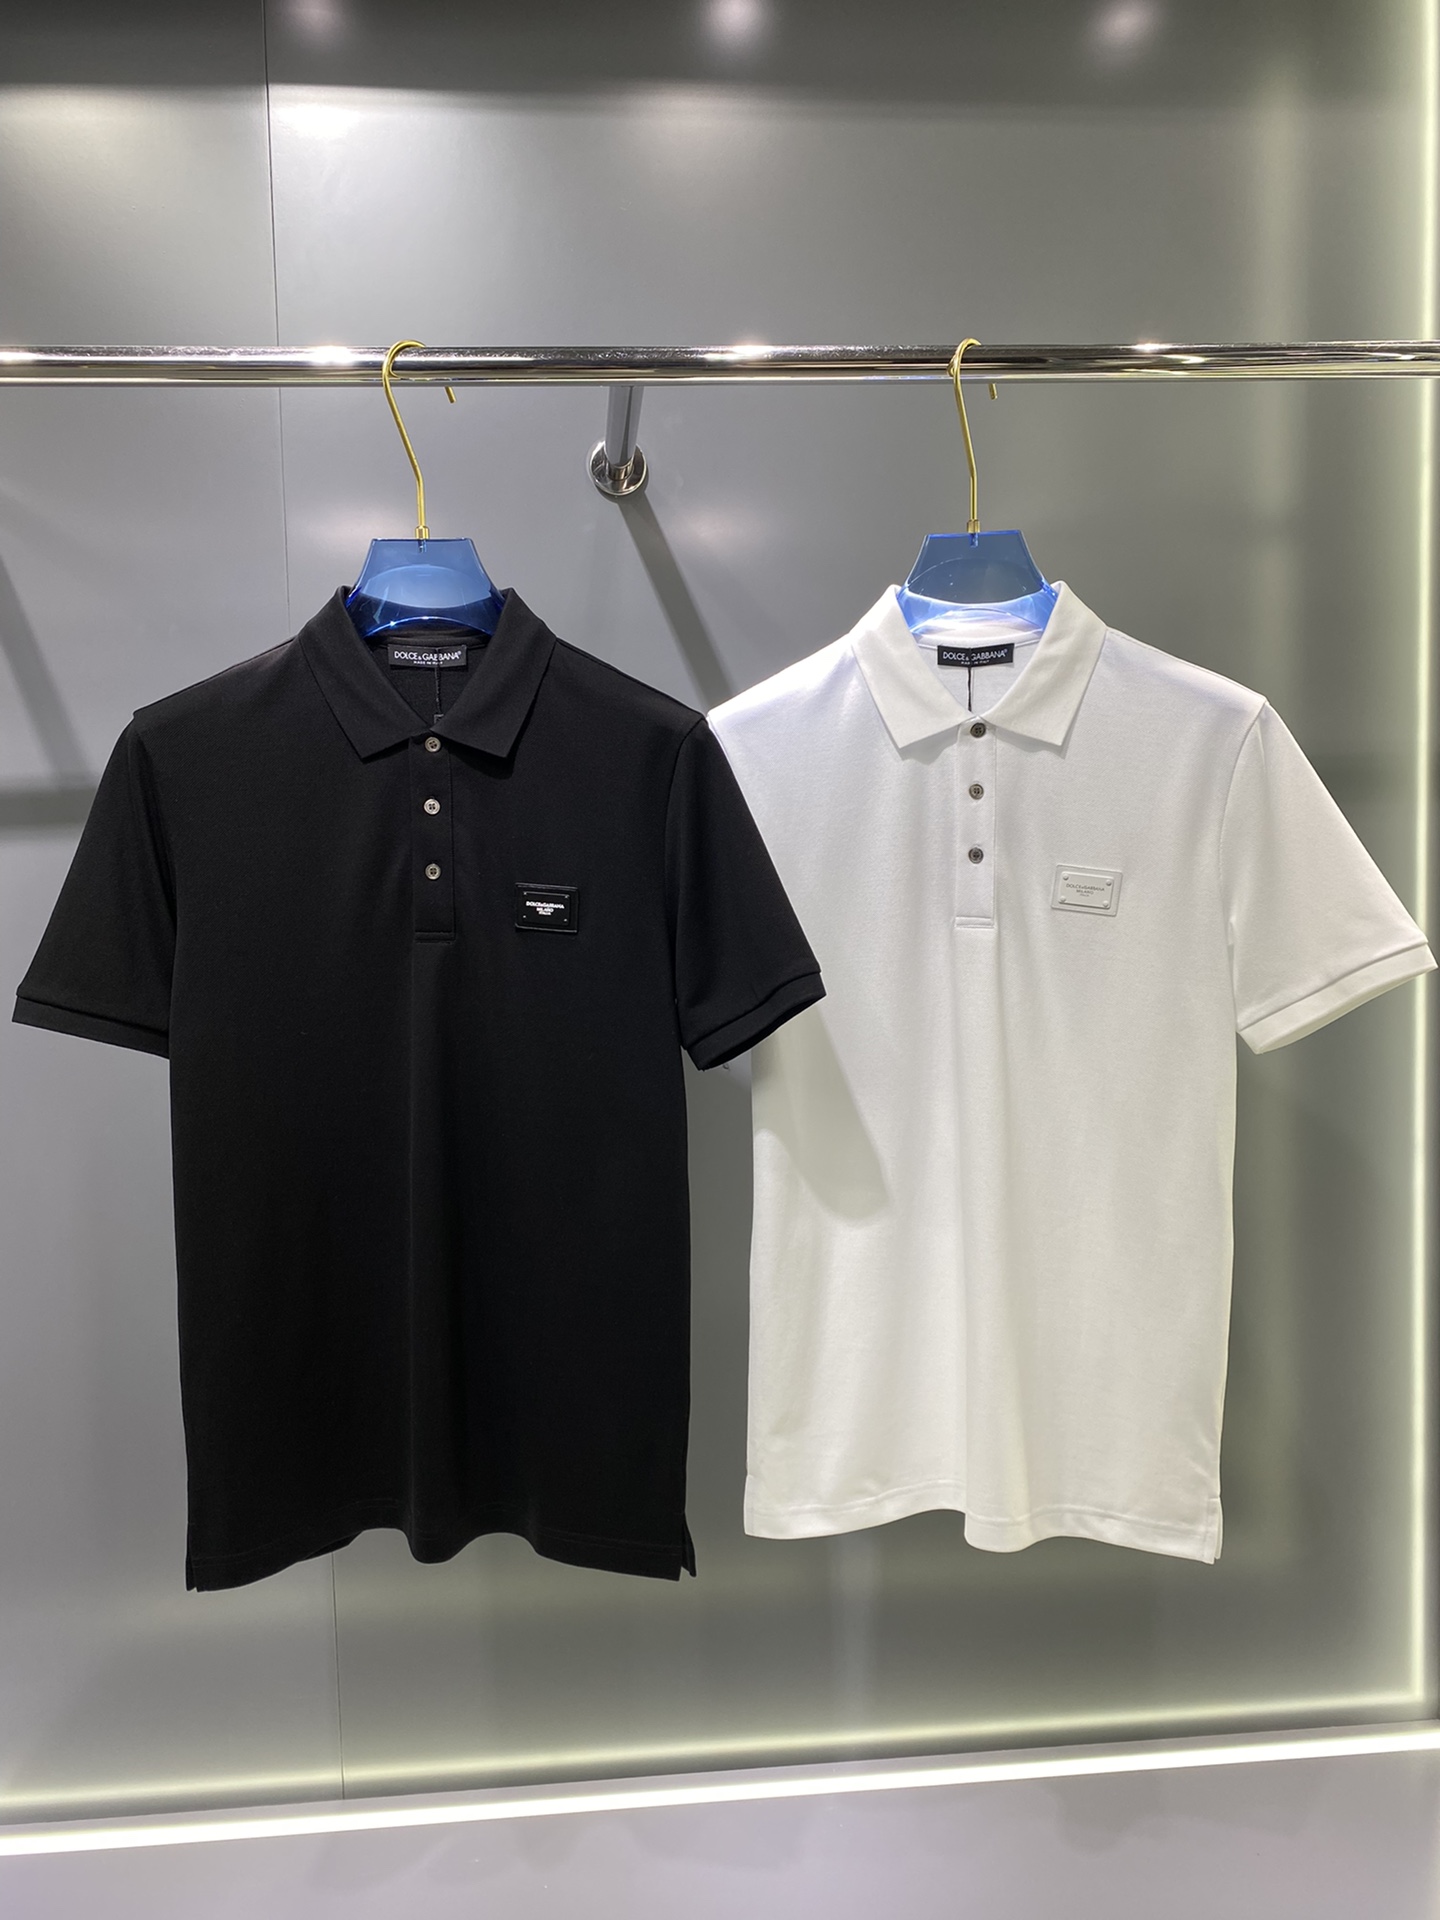 Pzldbd 2024# DG夏季新款短袖T恤polo，客供定制珠地面料，简单时尚款，超级好看！简单大方的款式！满满的高级感，四季可穿。颜色：黑色 白色 size：sbed-56